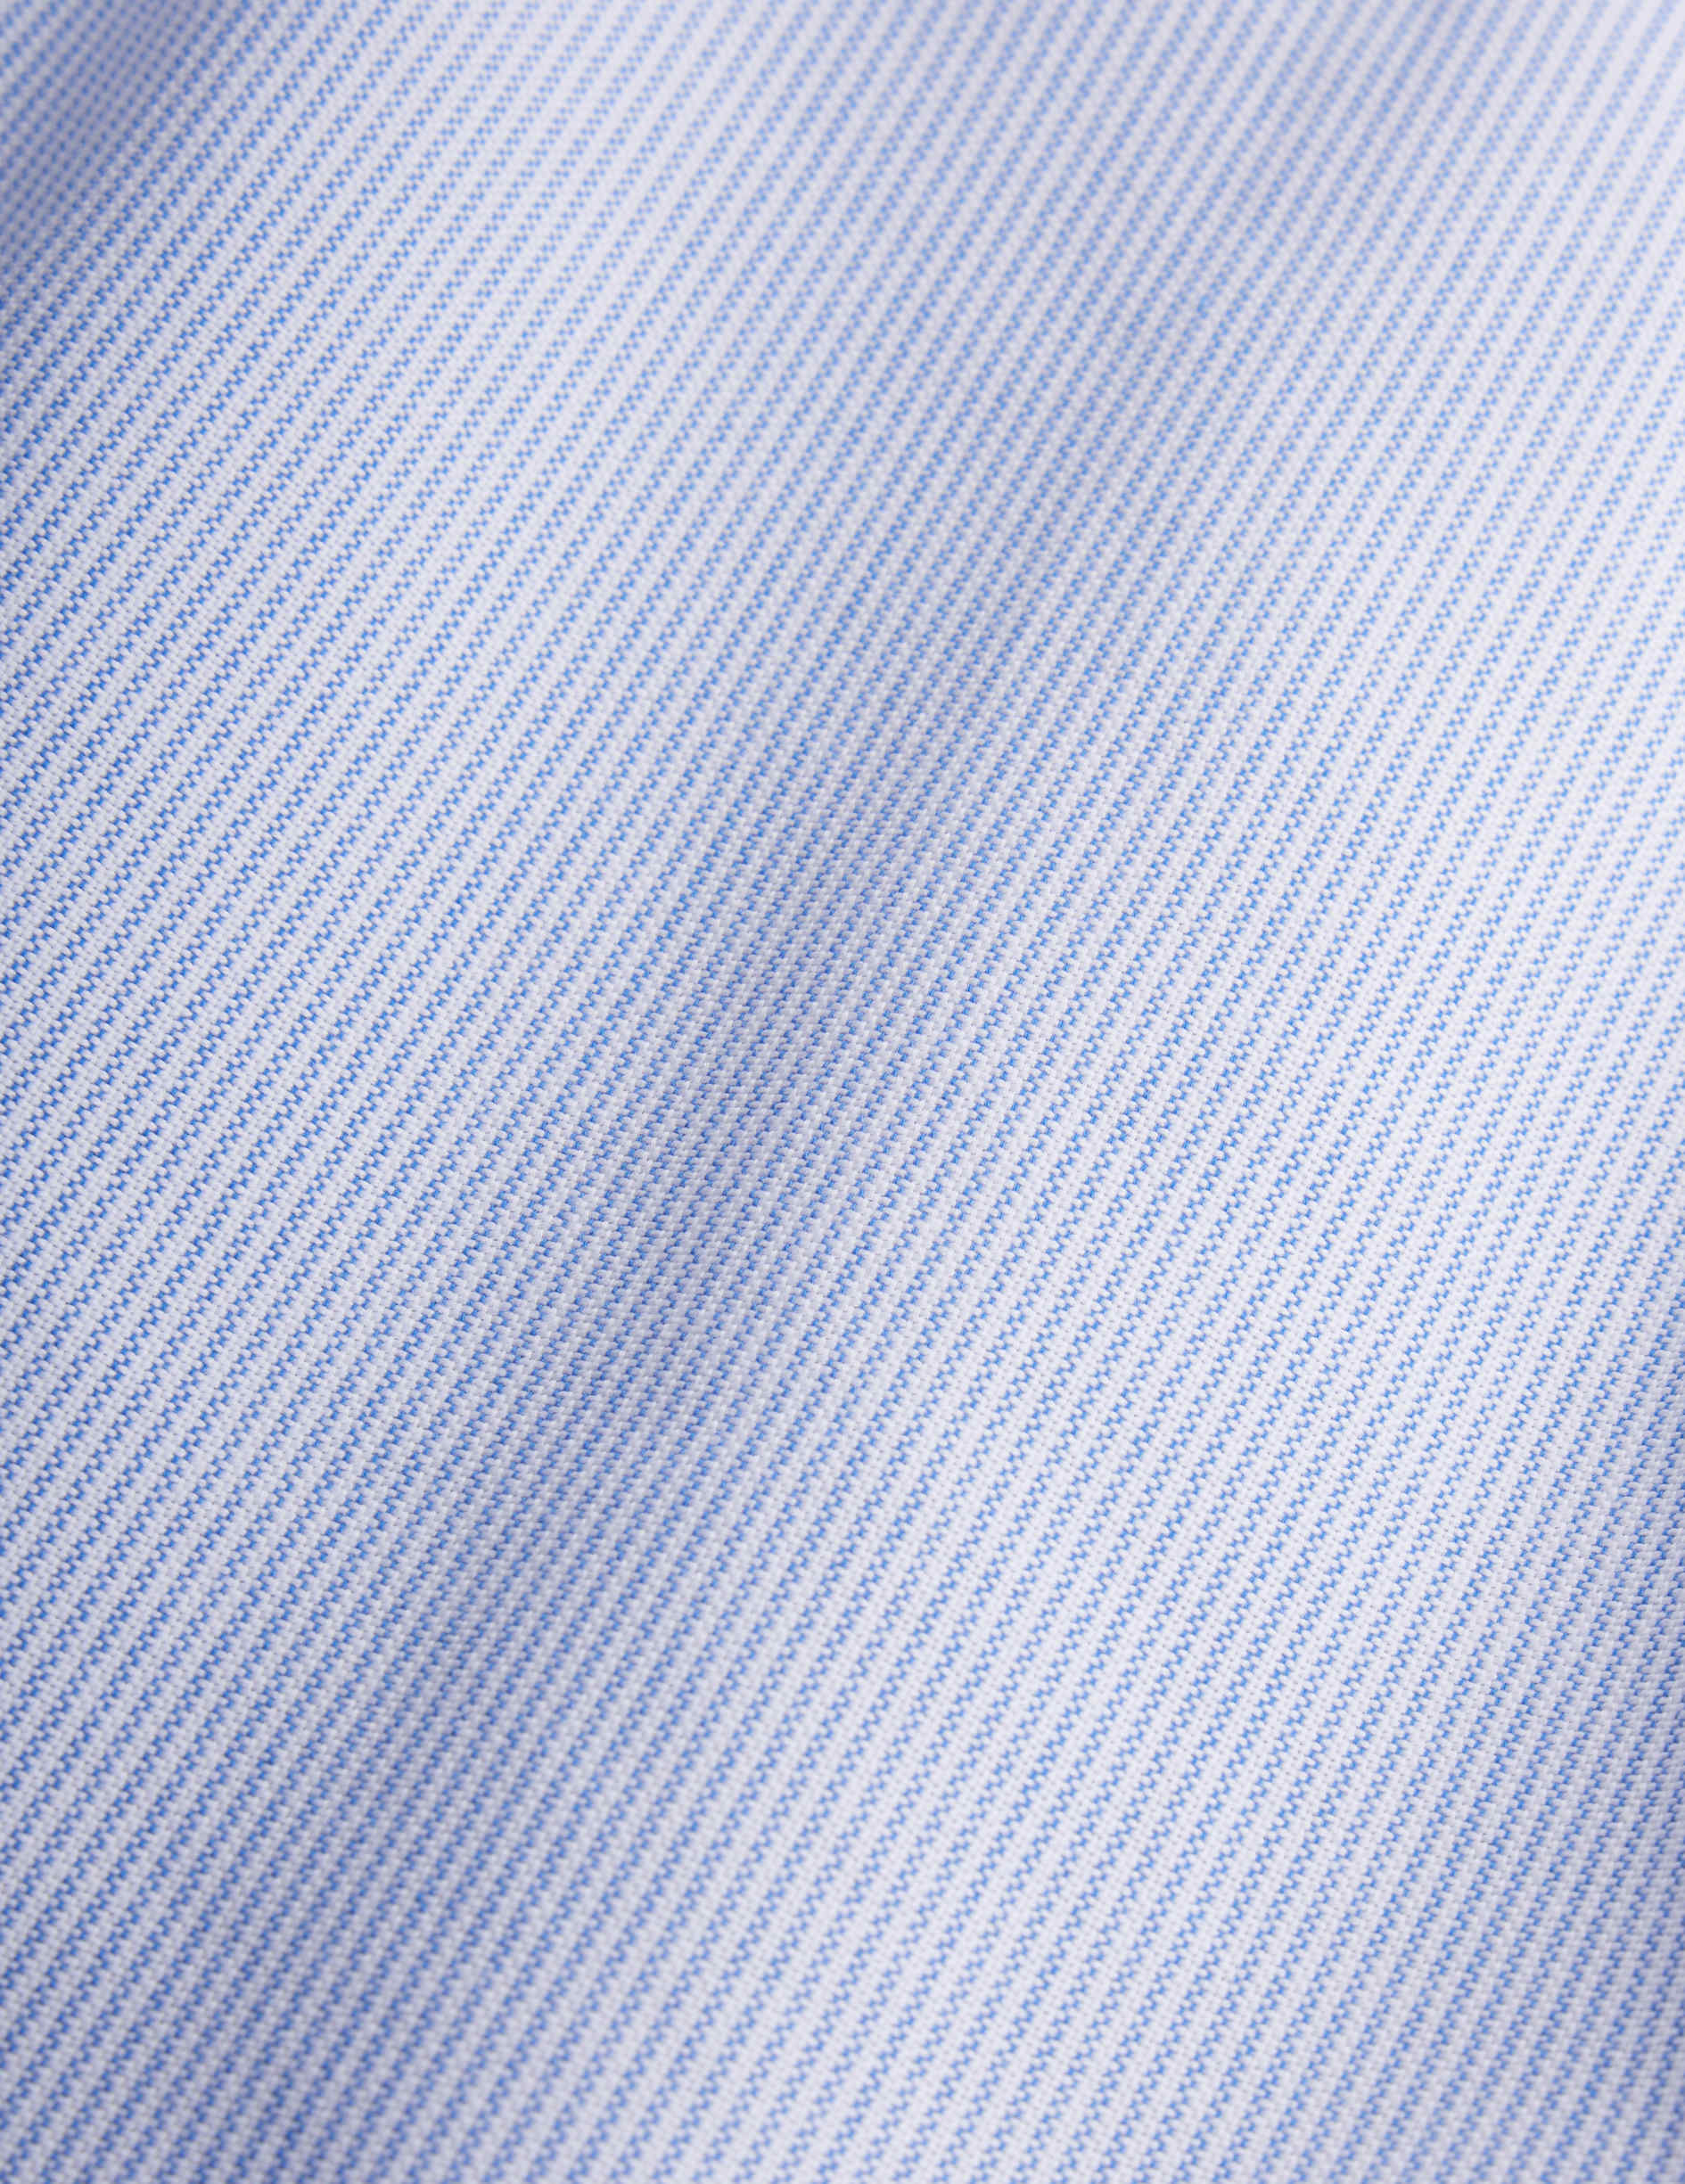 Striped blue Carl shirt - Oxford - Open straight Collar